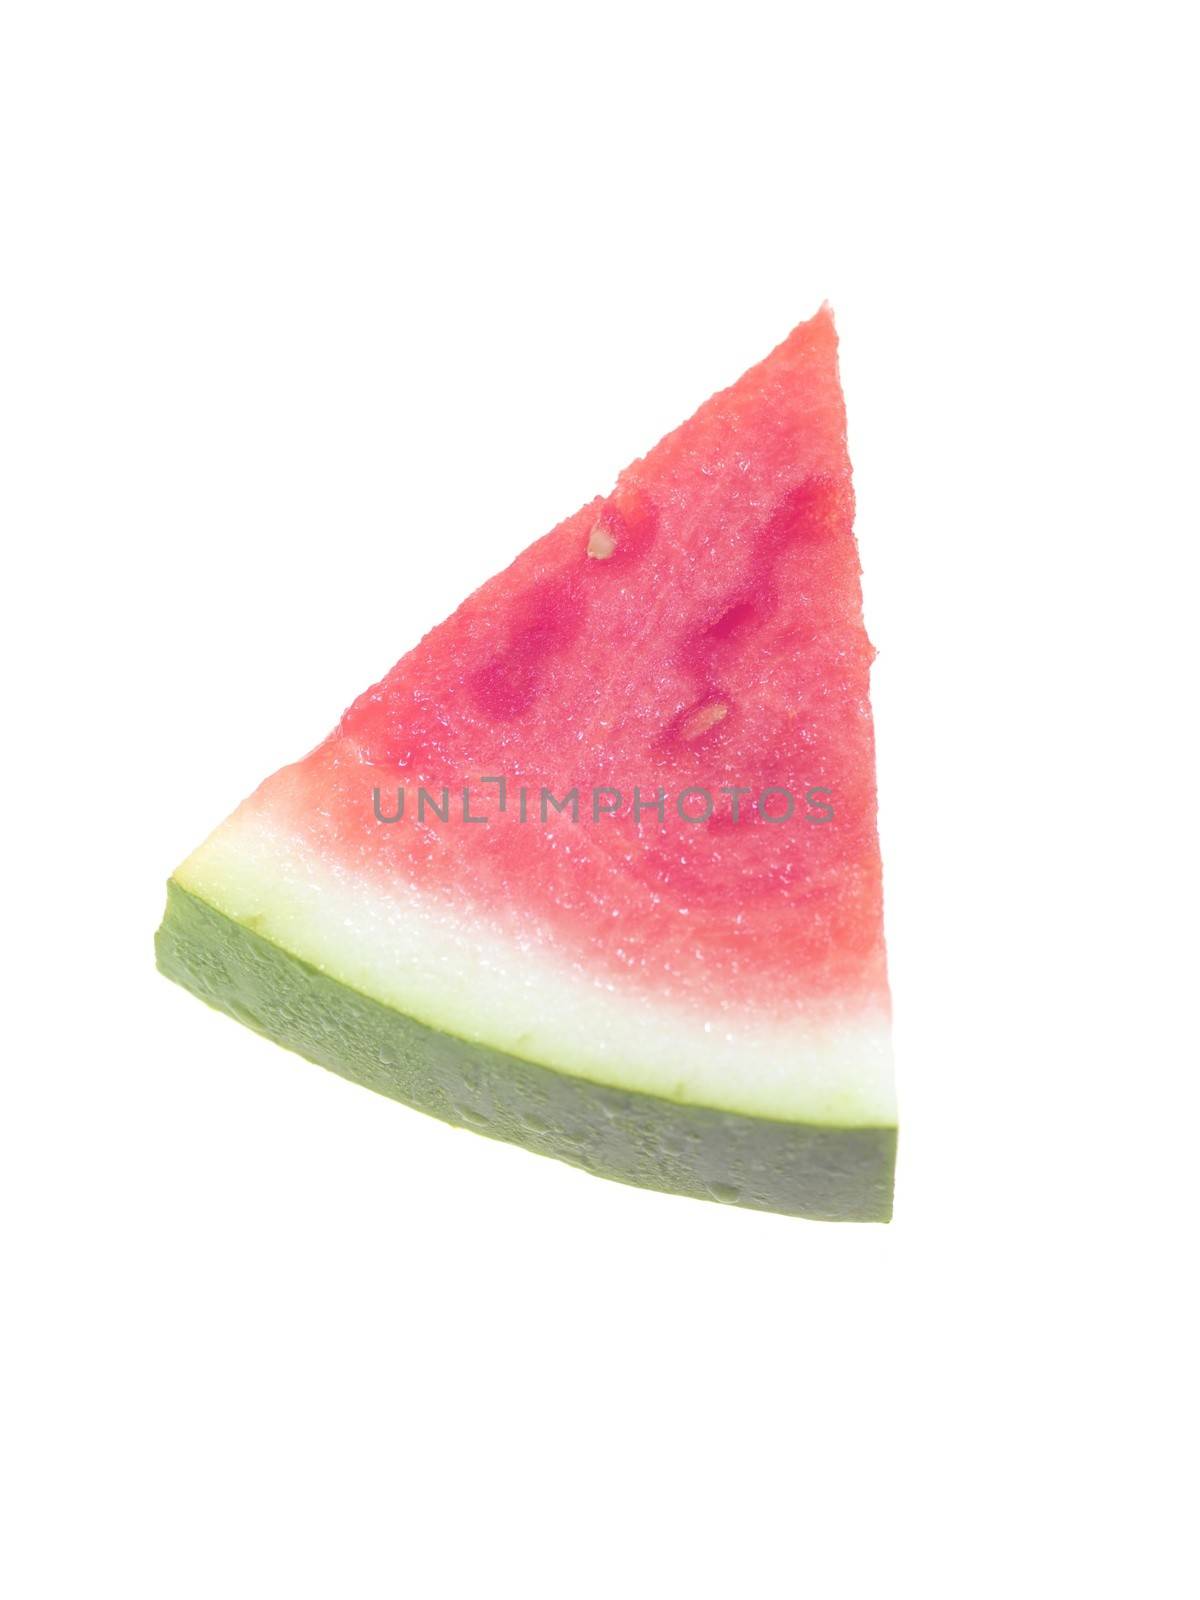 Watermelon by Kitch